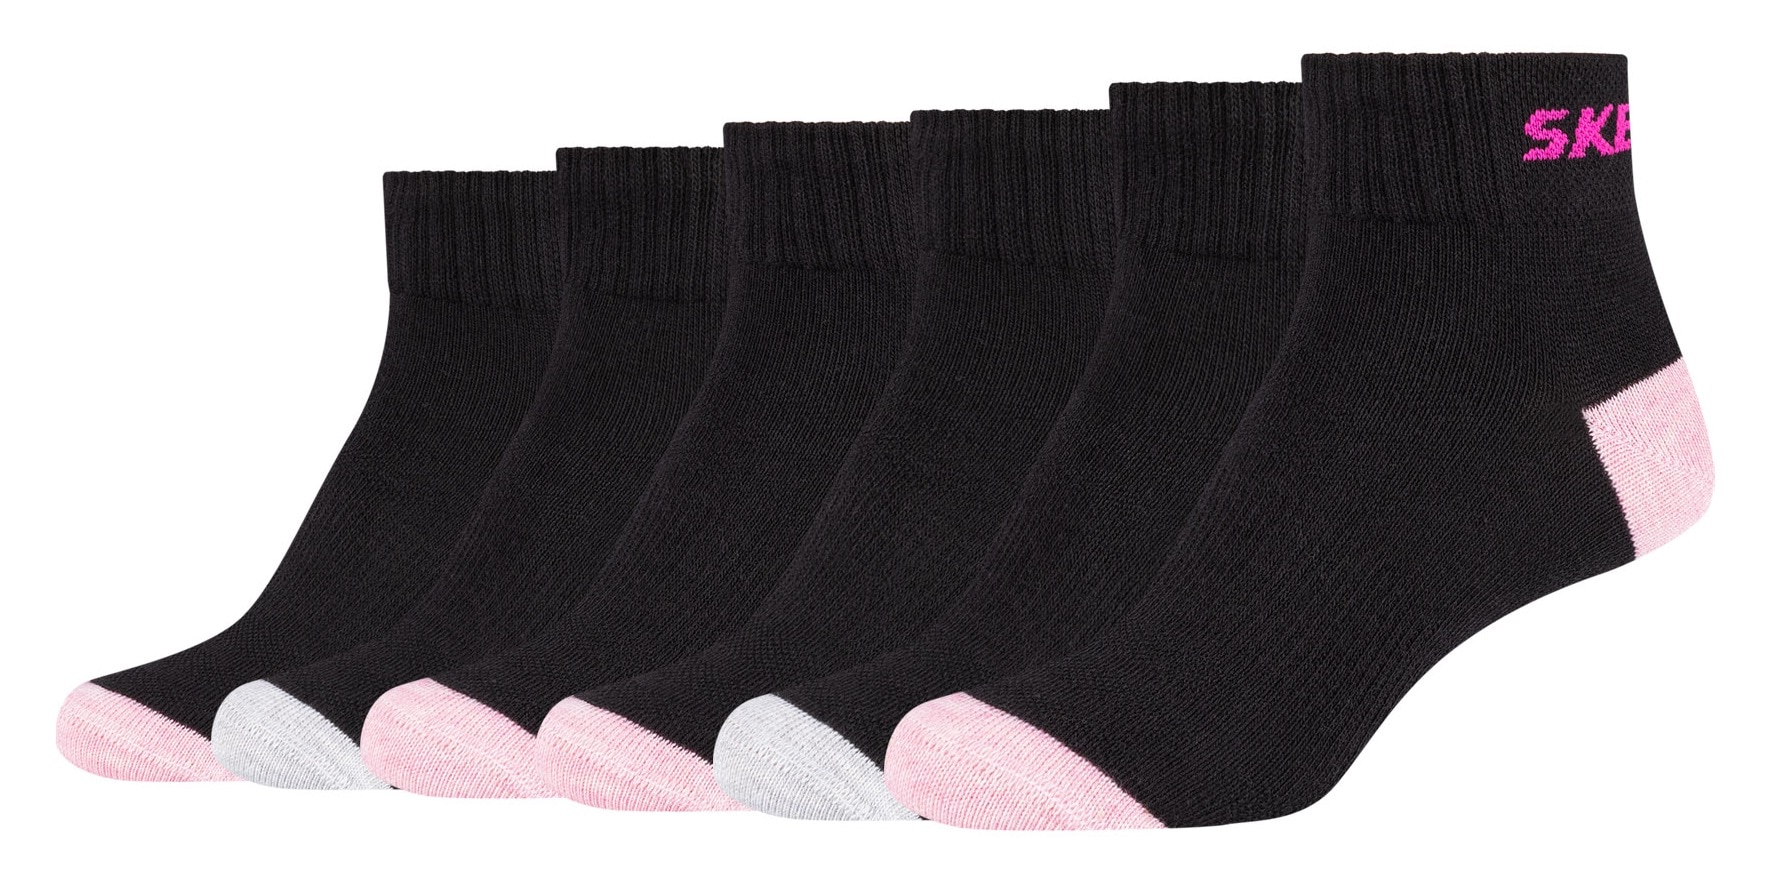 Mesh-Ventilation (6 (6 Skechers Socken, Paar) kaufen System Paar), mit